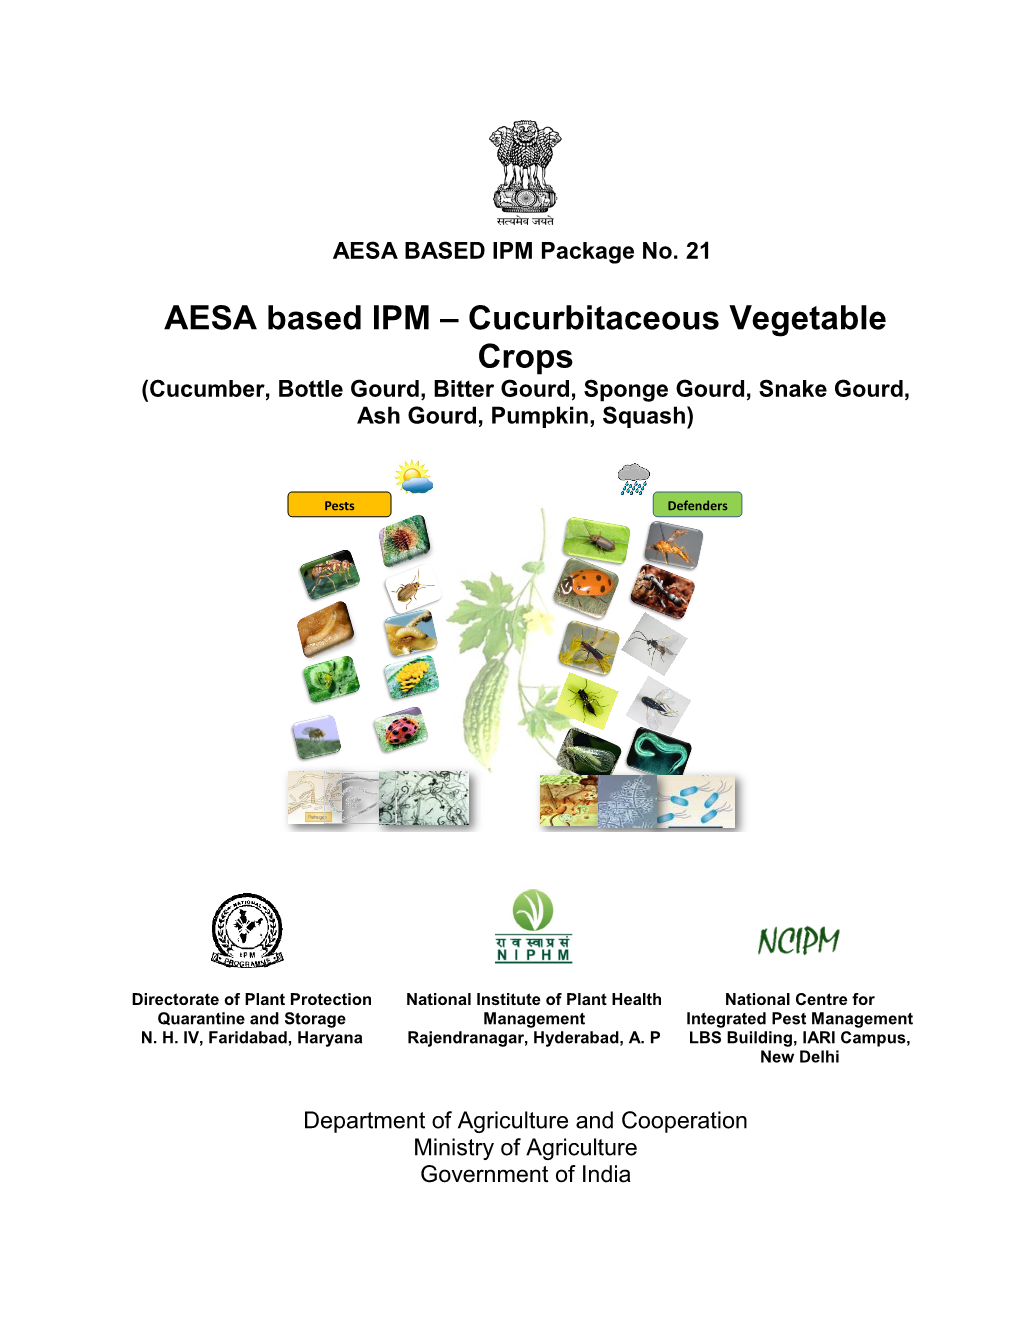 AESA Based IPM – Cucurbitaceous Vegetable Crops (Cucumber, Bottle Gourd, Bitter Gourd, Sponge Gourd, Snake Gourd, Ash Gourd, Pumpkin, Squash)